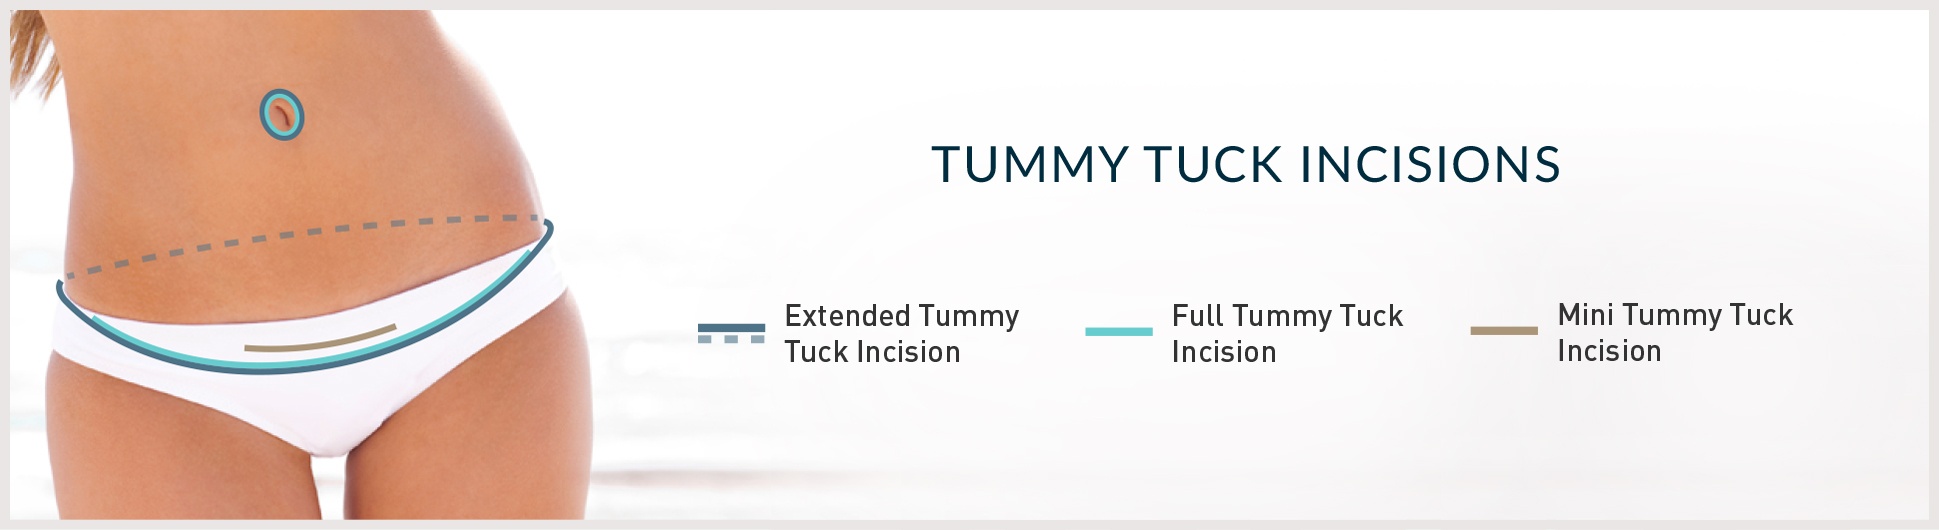 tummy tuck incisions illustration